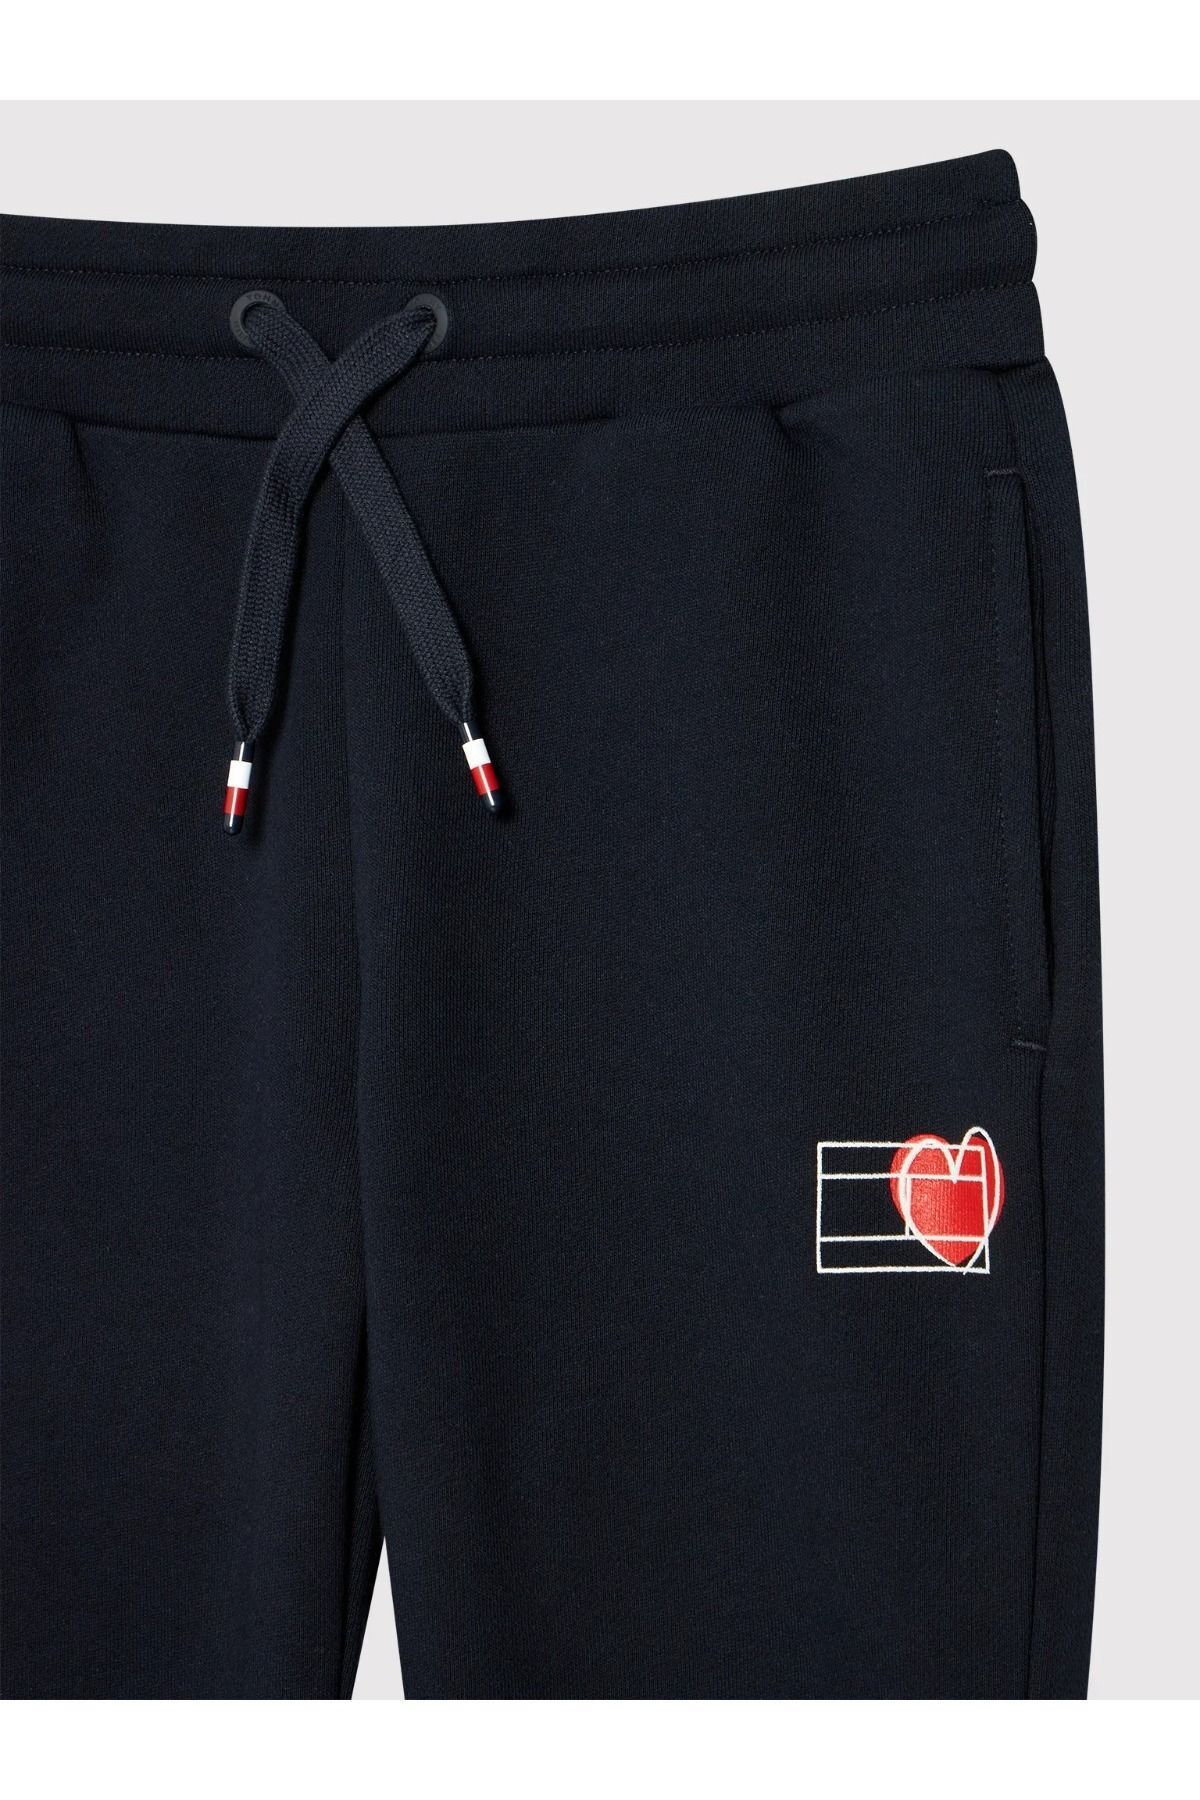 Tommy Hilfiger Valentines Day sweatpants KS0KS00258 Navy Blue Regular Fit